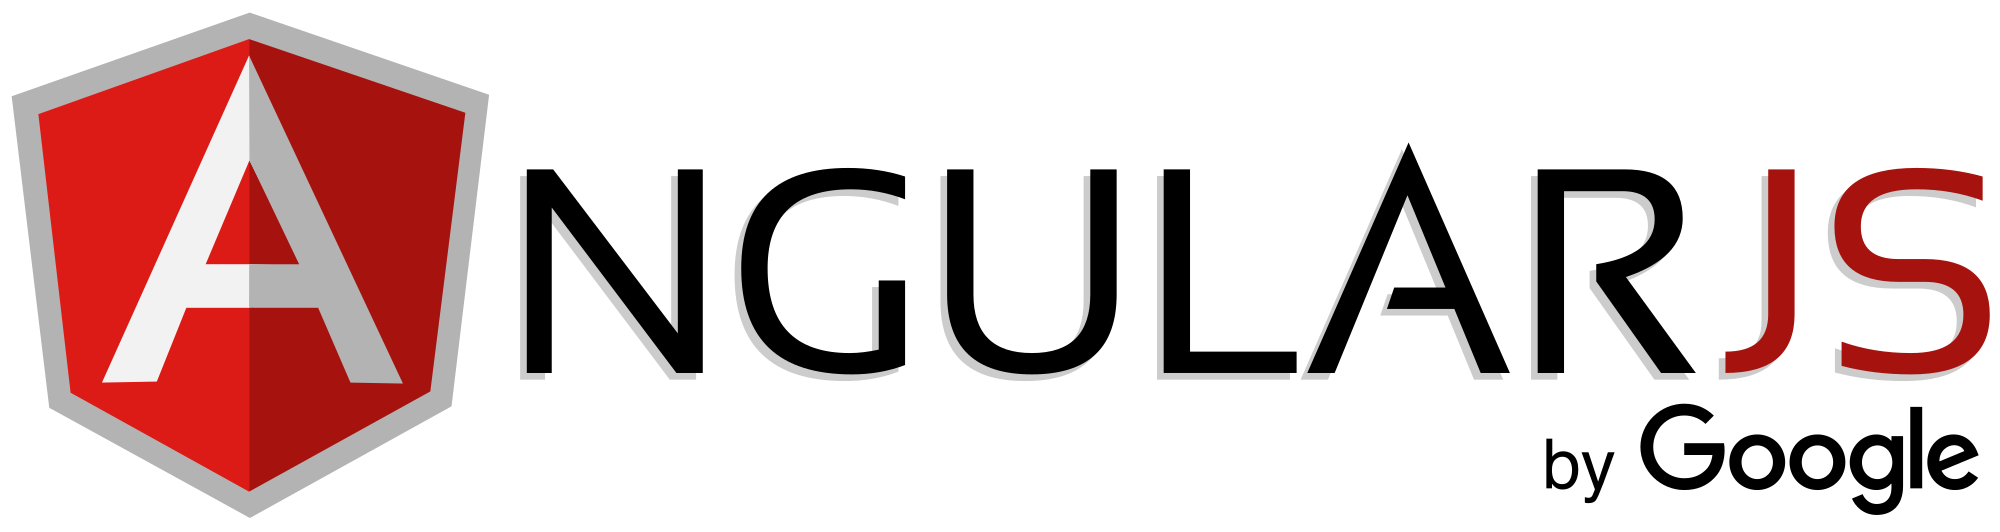 AugularJS Logo